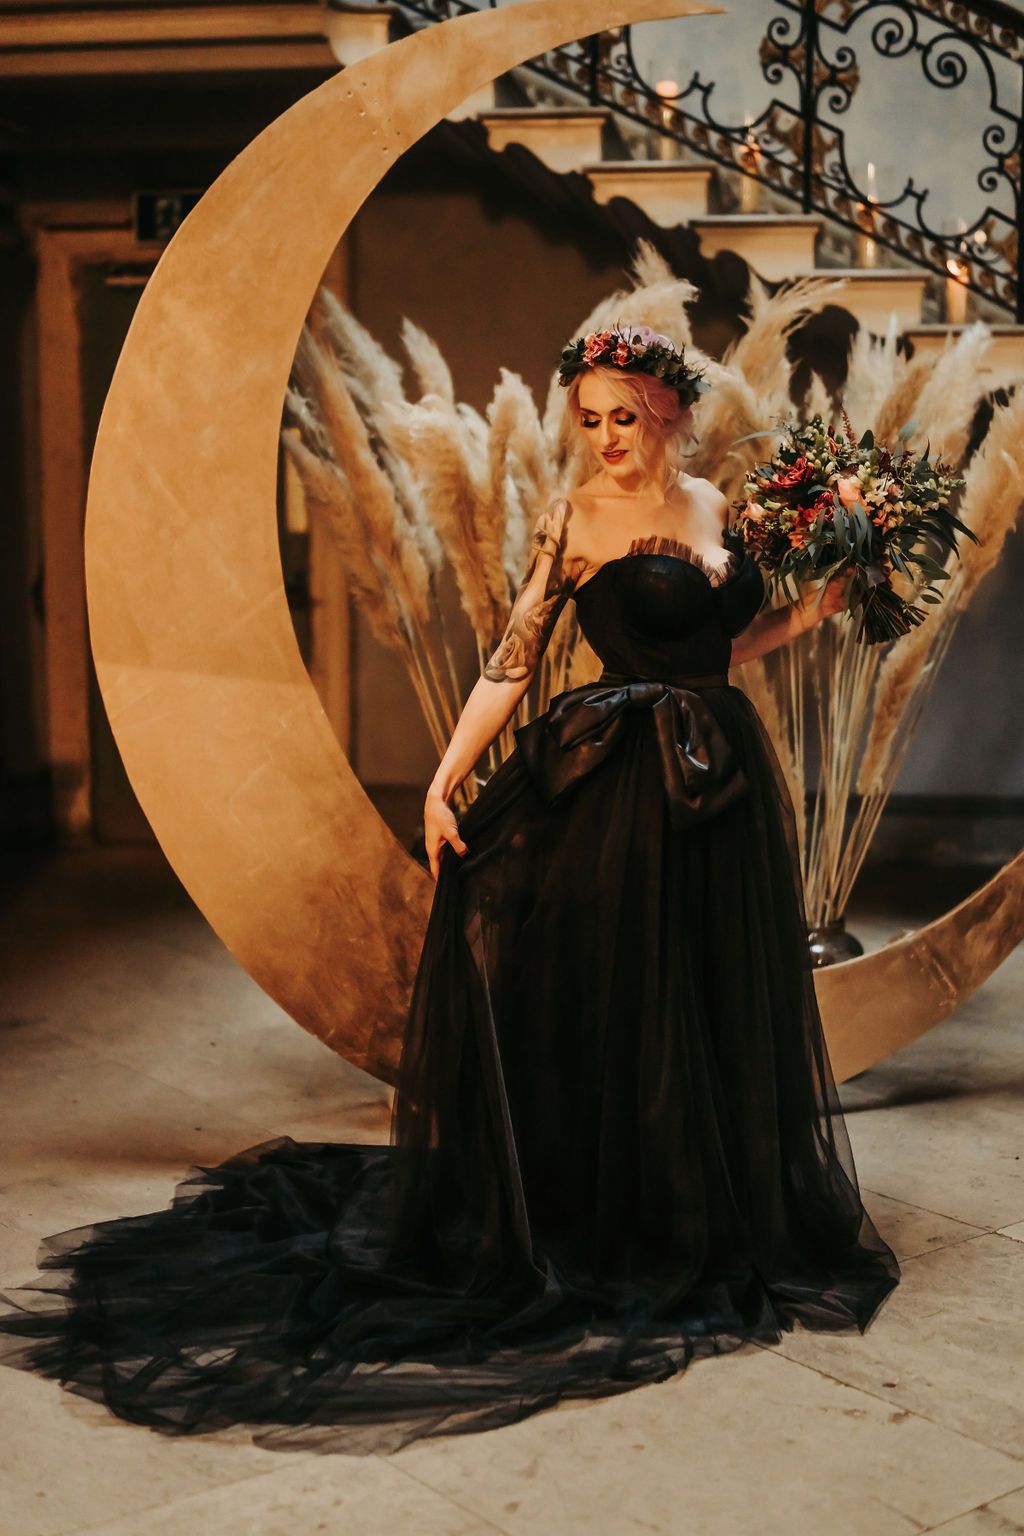 Black corset alternative wedding dress